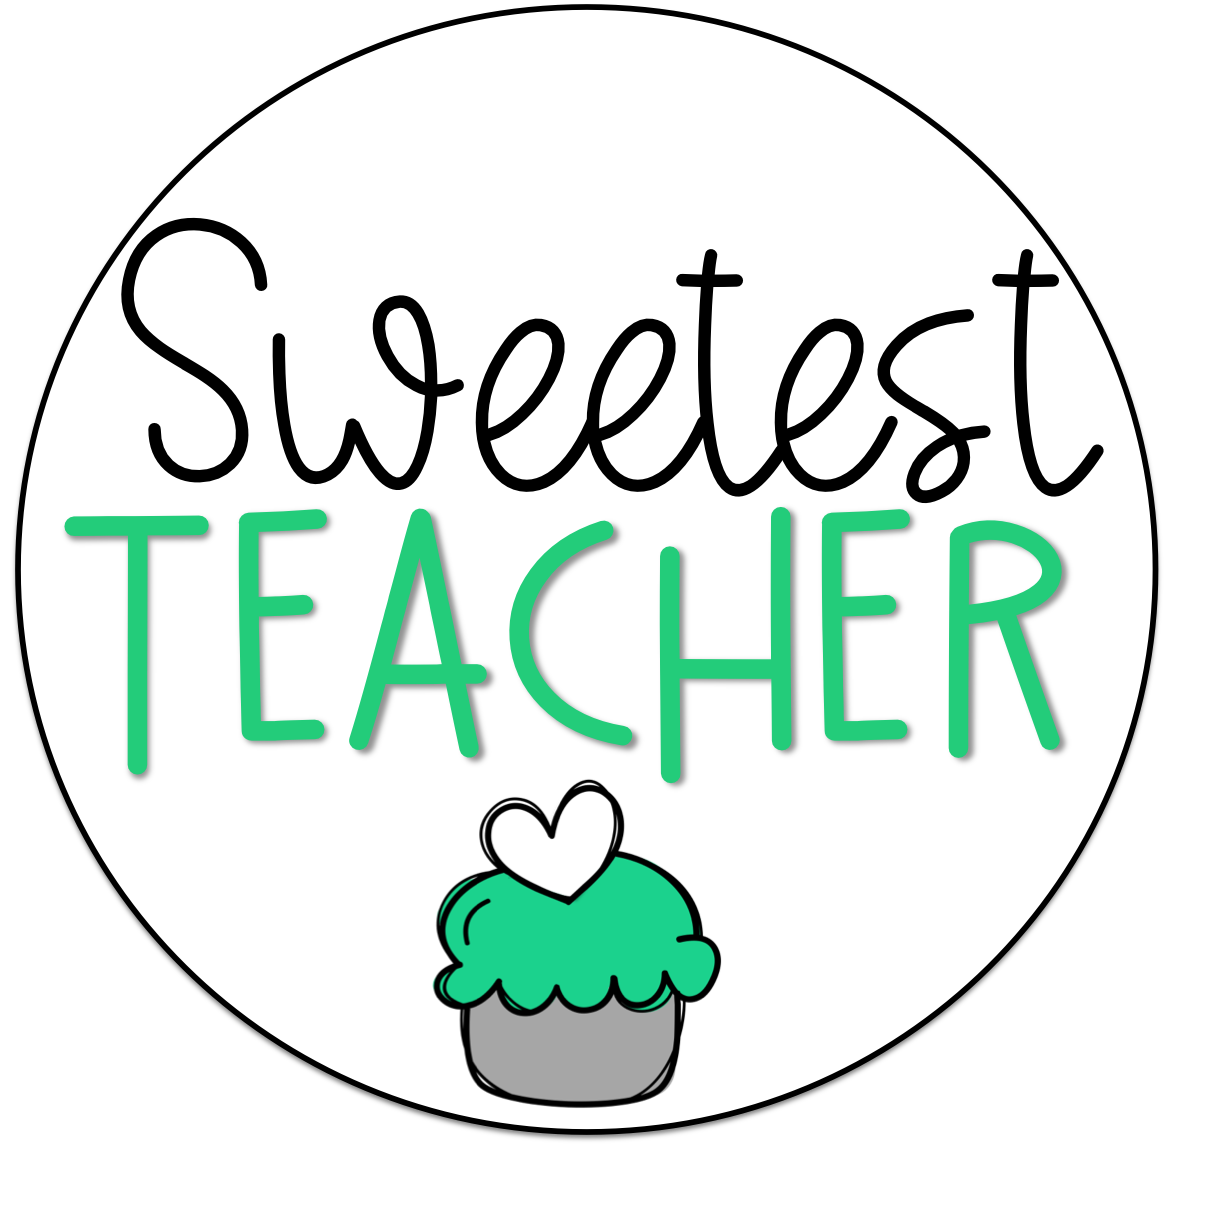 Sweetest Teacher